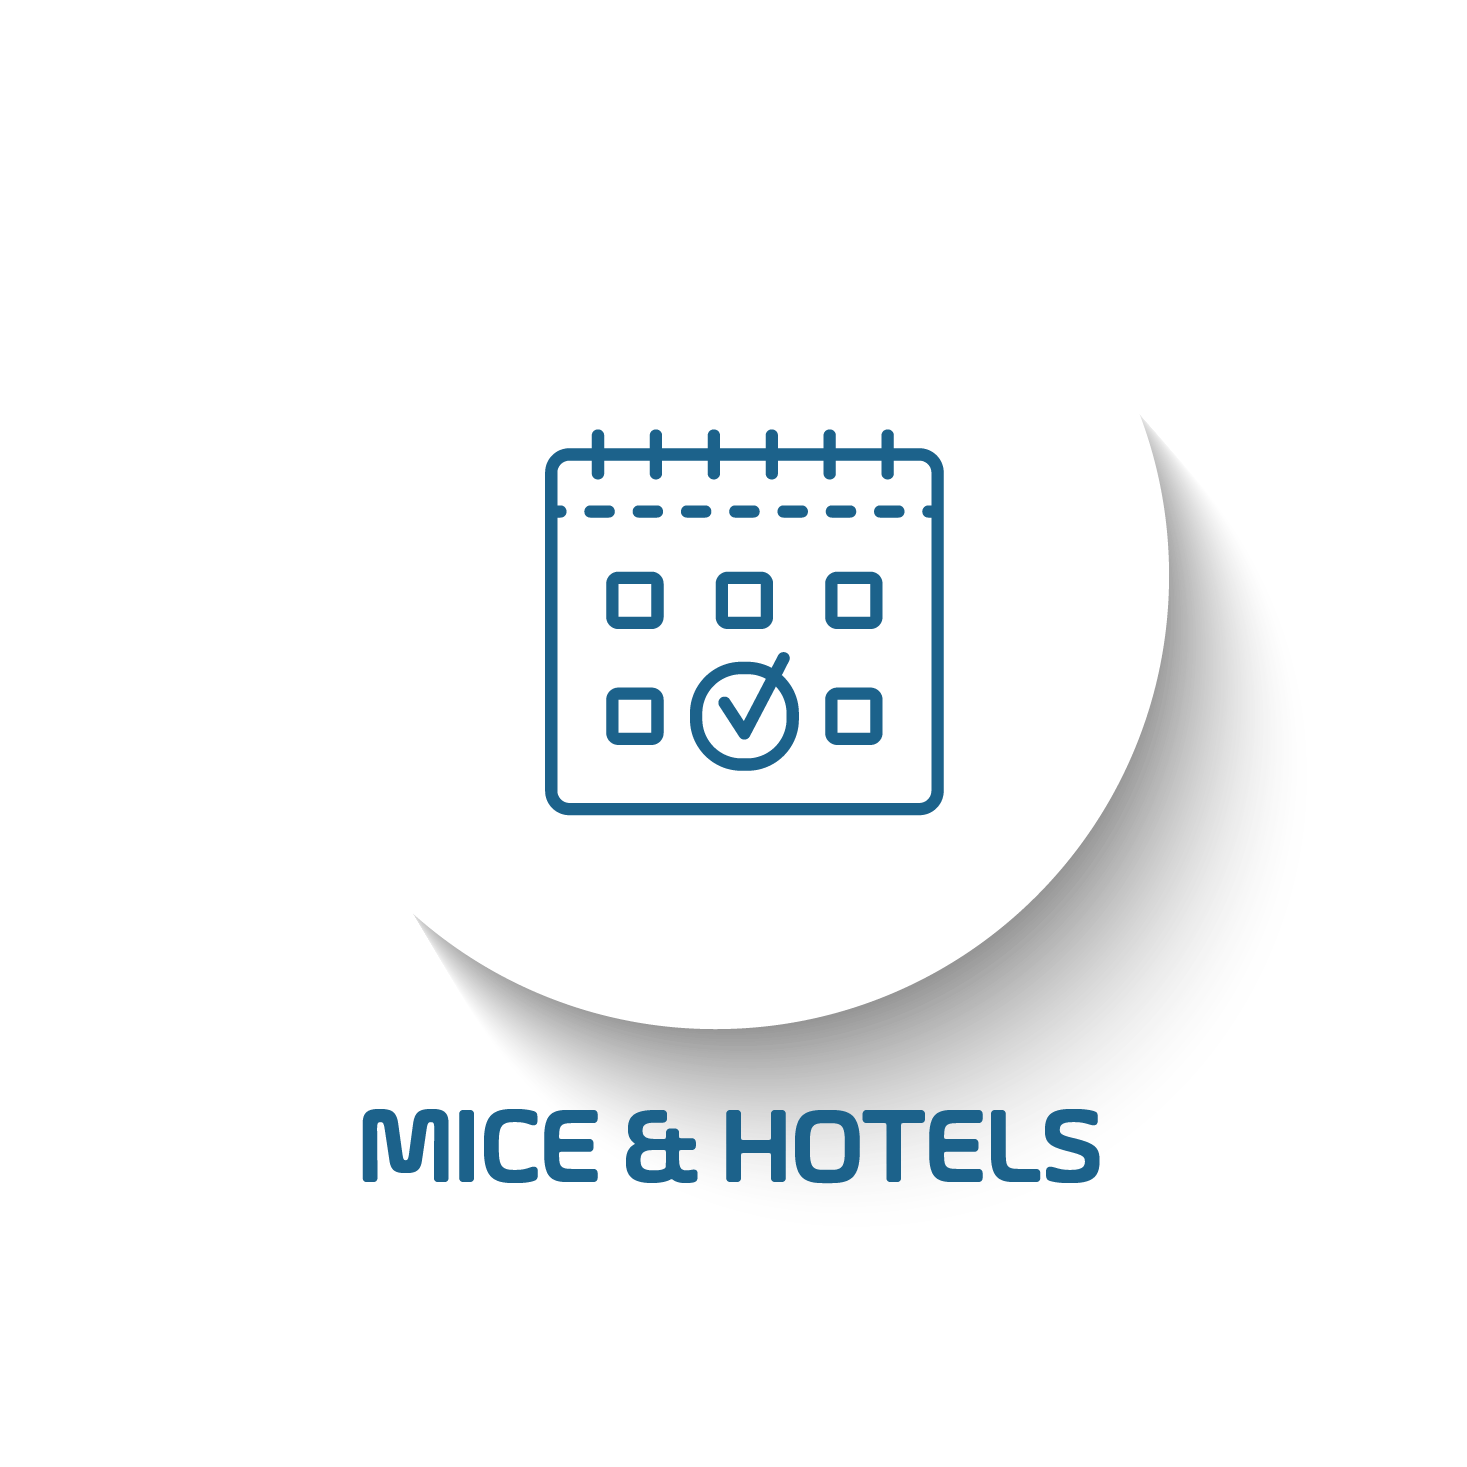 MICE &amp; HOTELS